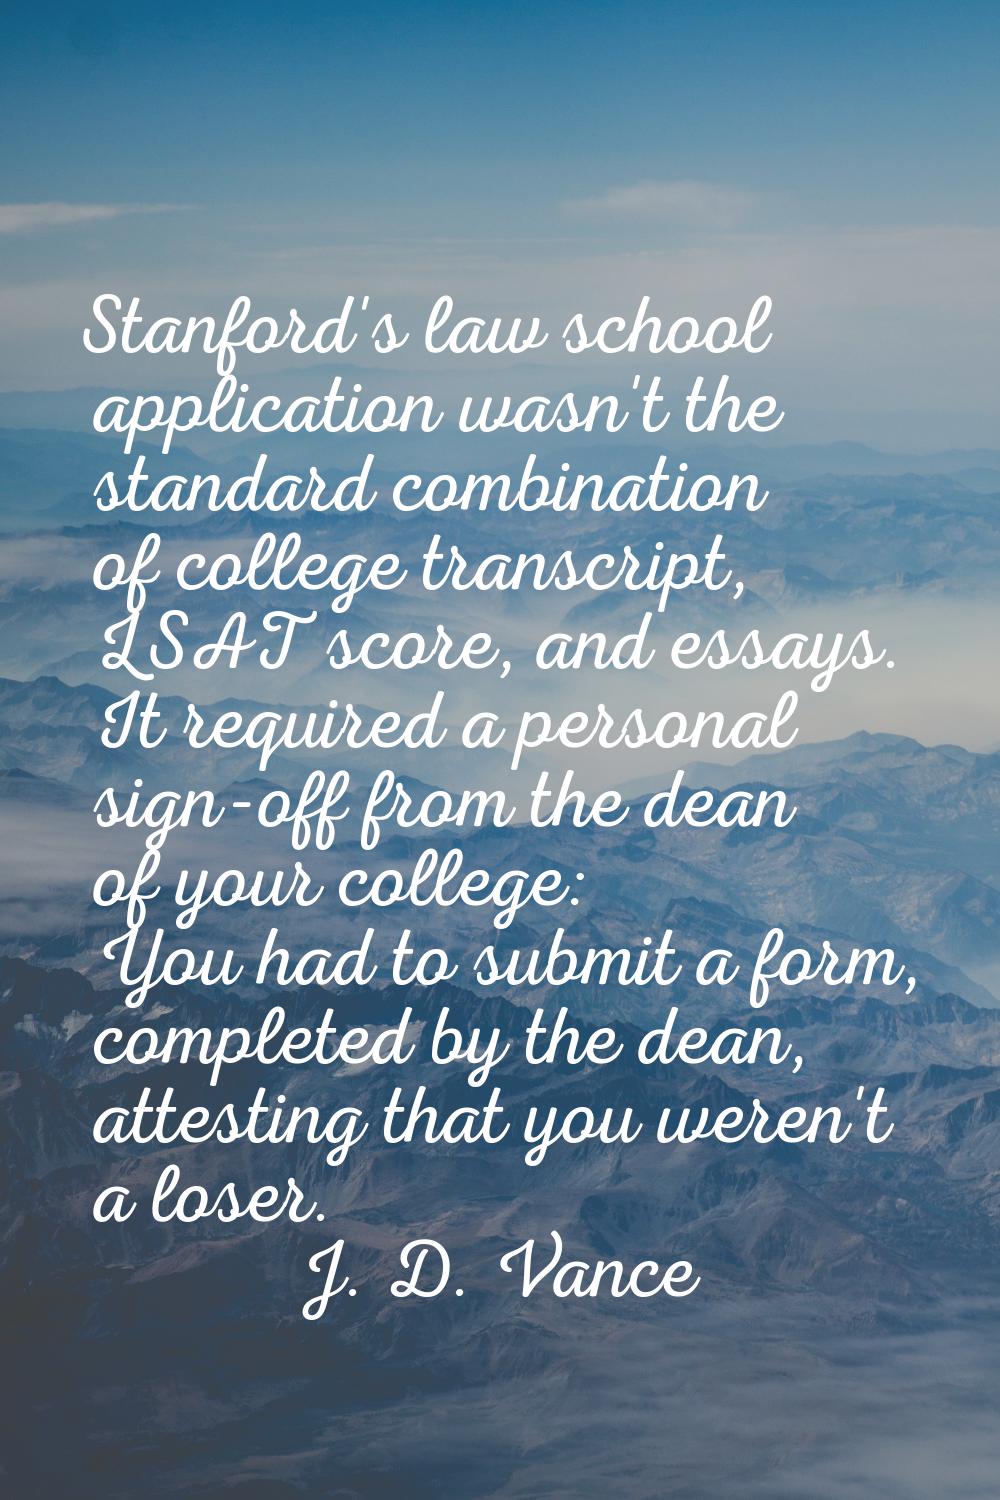 Stanford's law school application wasn't the standard combination of college transcript, LSAT score